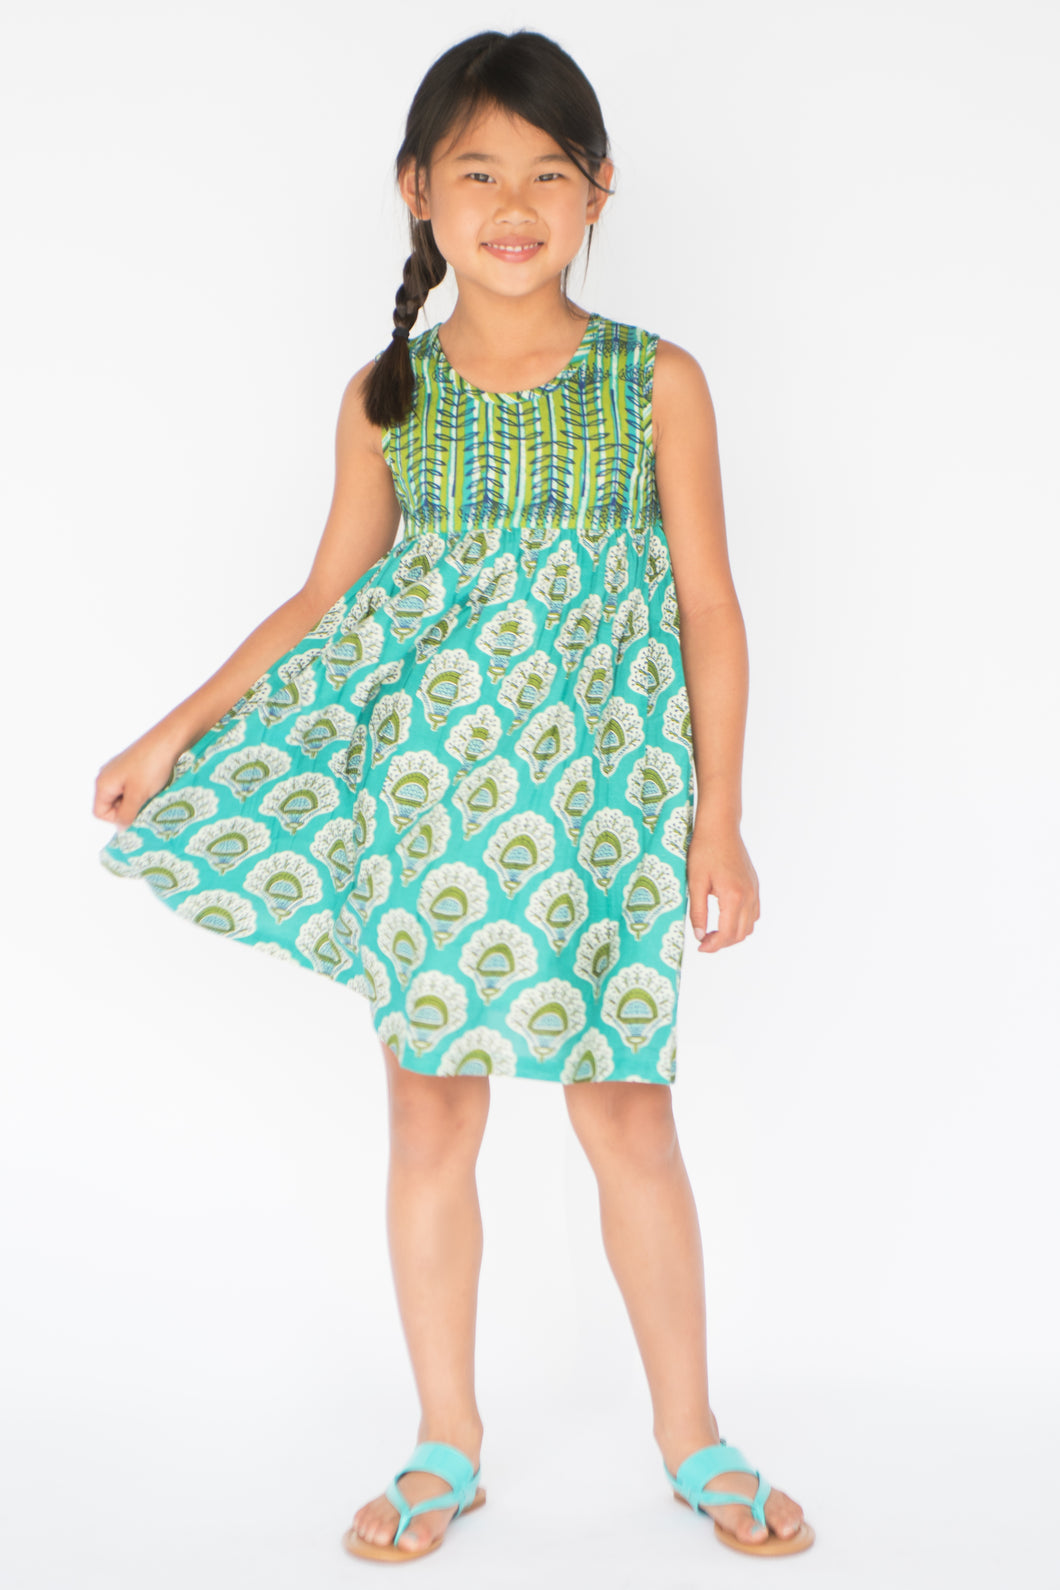 Turquoise Yoke Dress With Belt Tie - Kids Wholesale Boutique Clothing, Shirt-Dress - Girls Dresses, Yo Baby Wholesale - Yo Baby